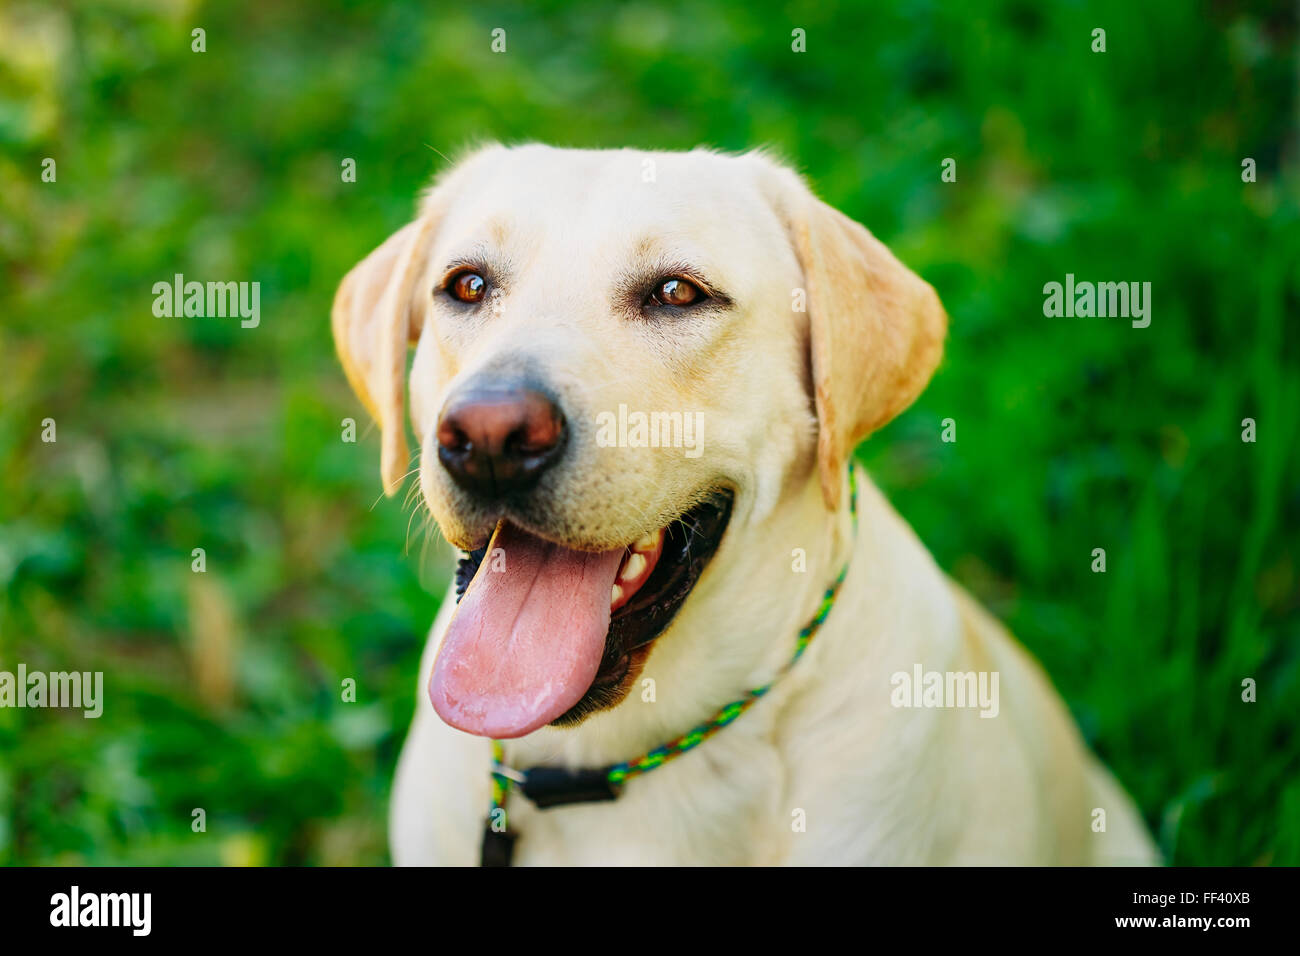 Funny White Labrador Retriever Dog Close Up Portrait On Green Grass Background Stock Photo